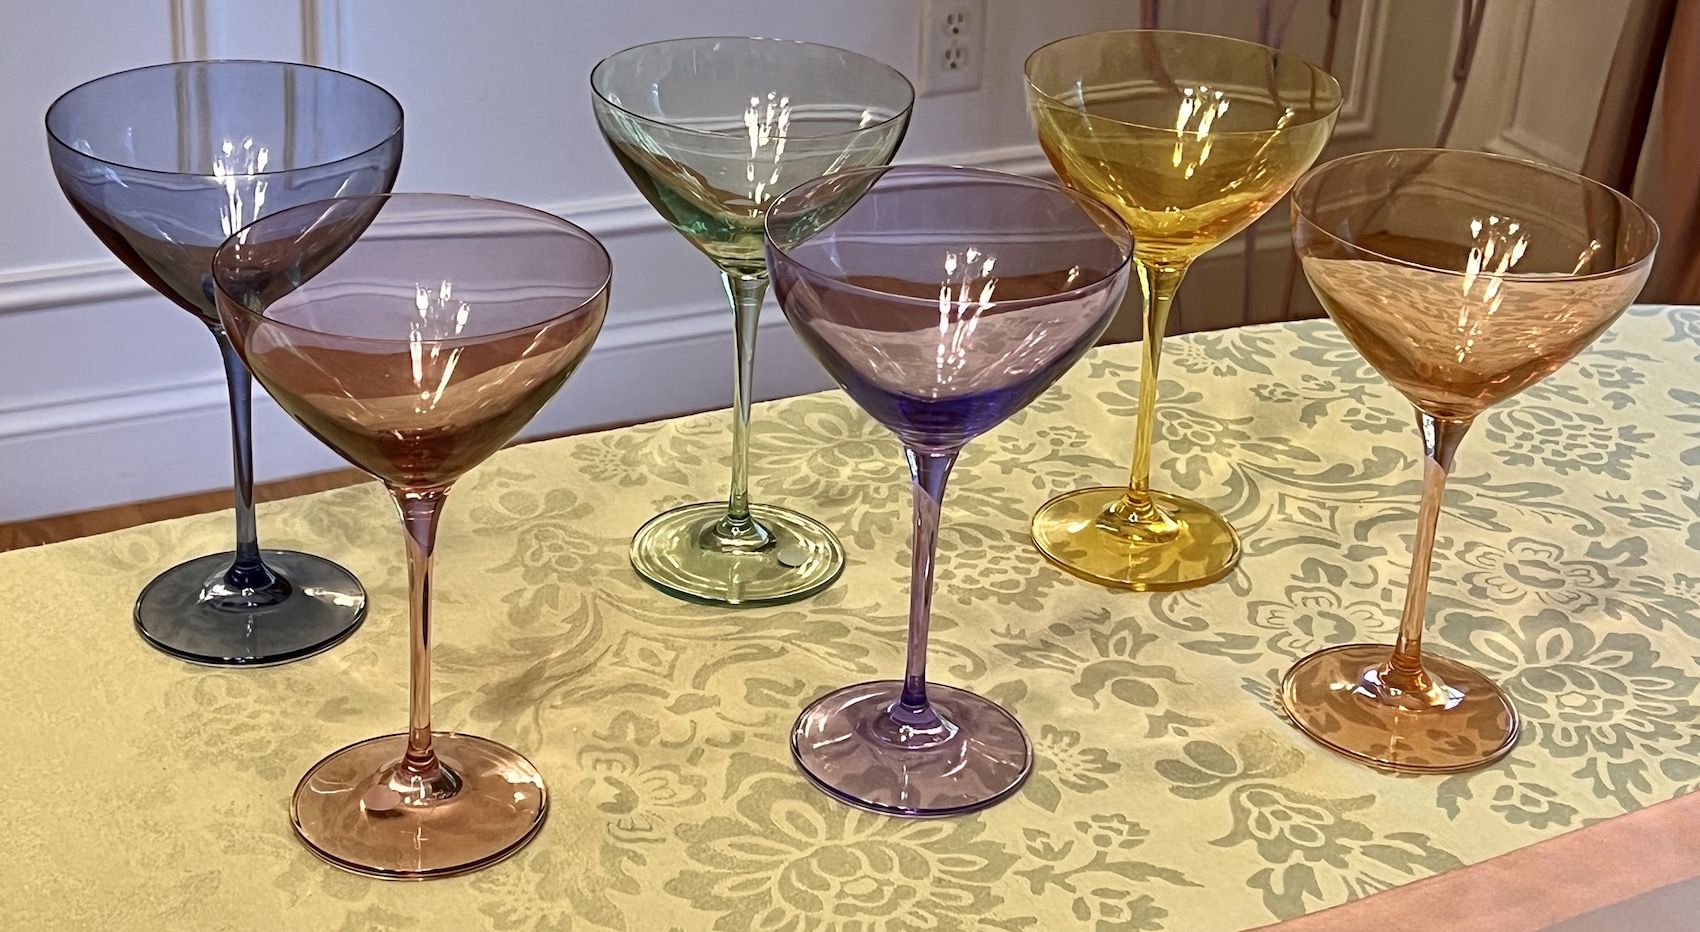 Estelle Colored Martini Glass - Set of 6 {Iridescent}